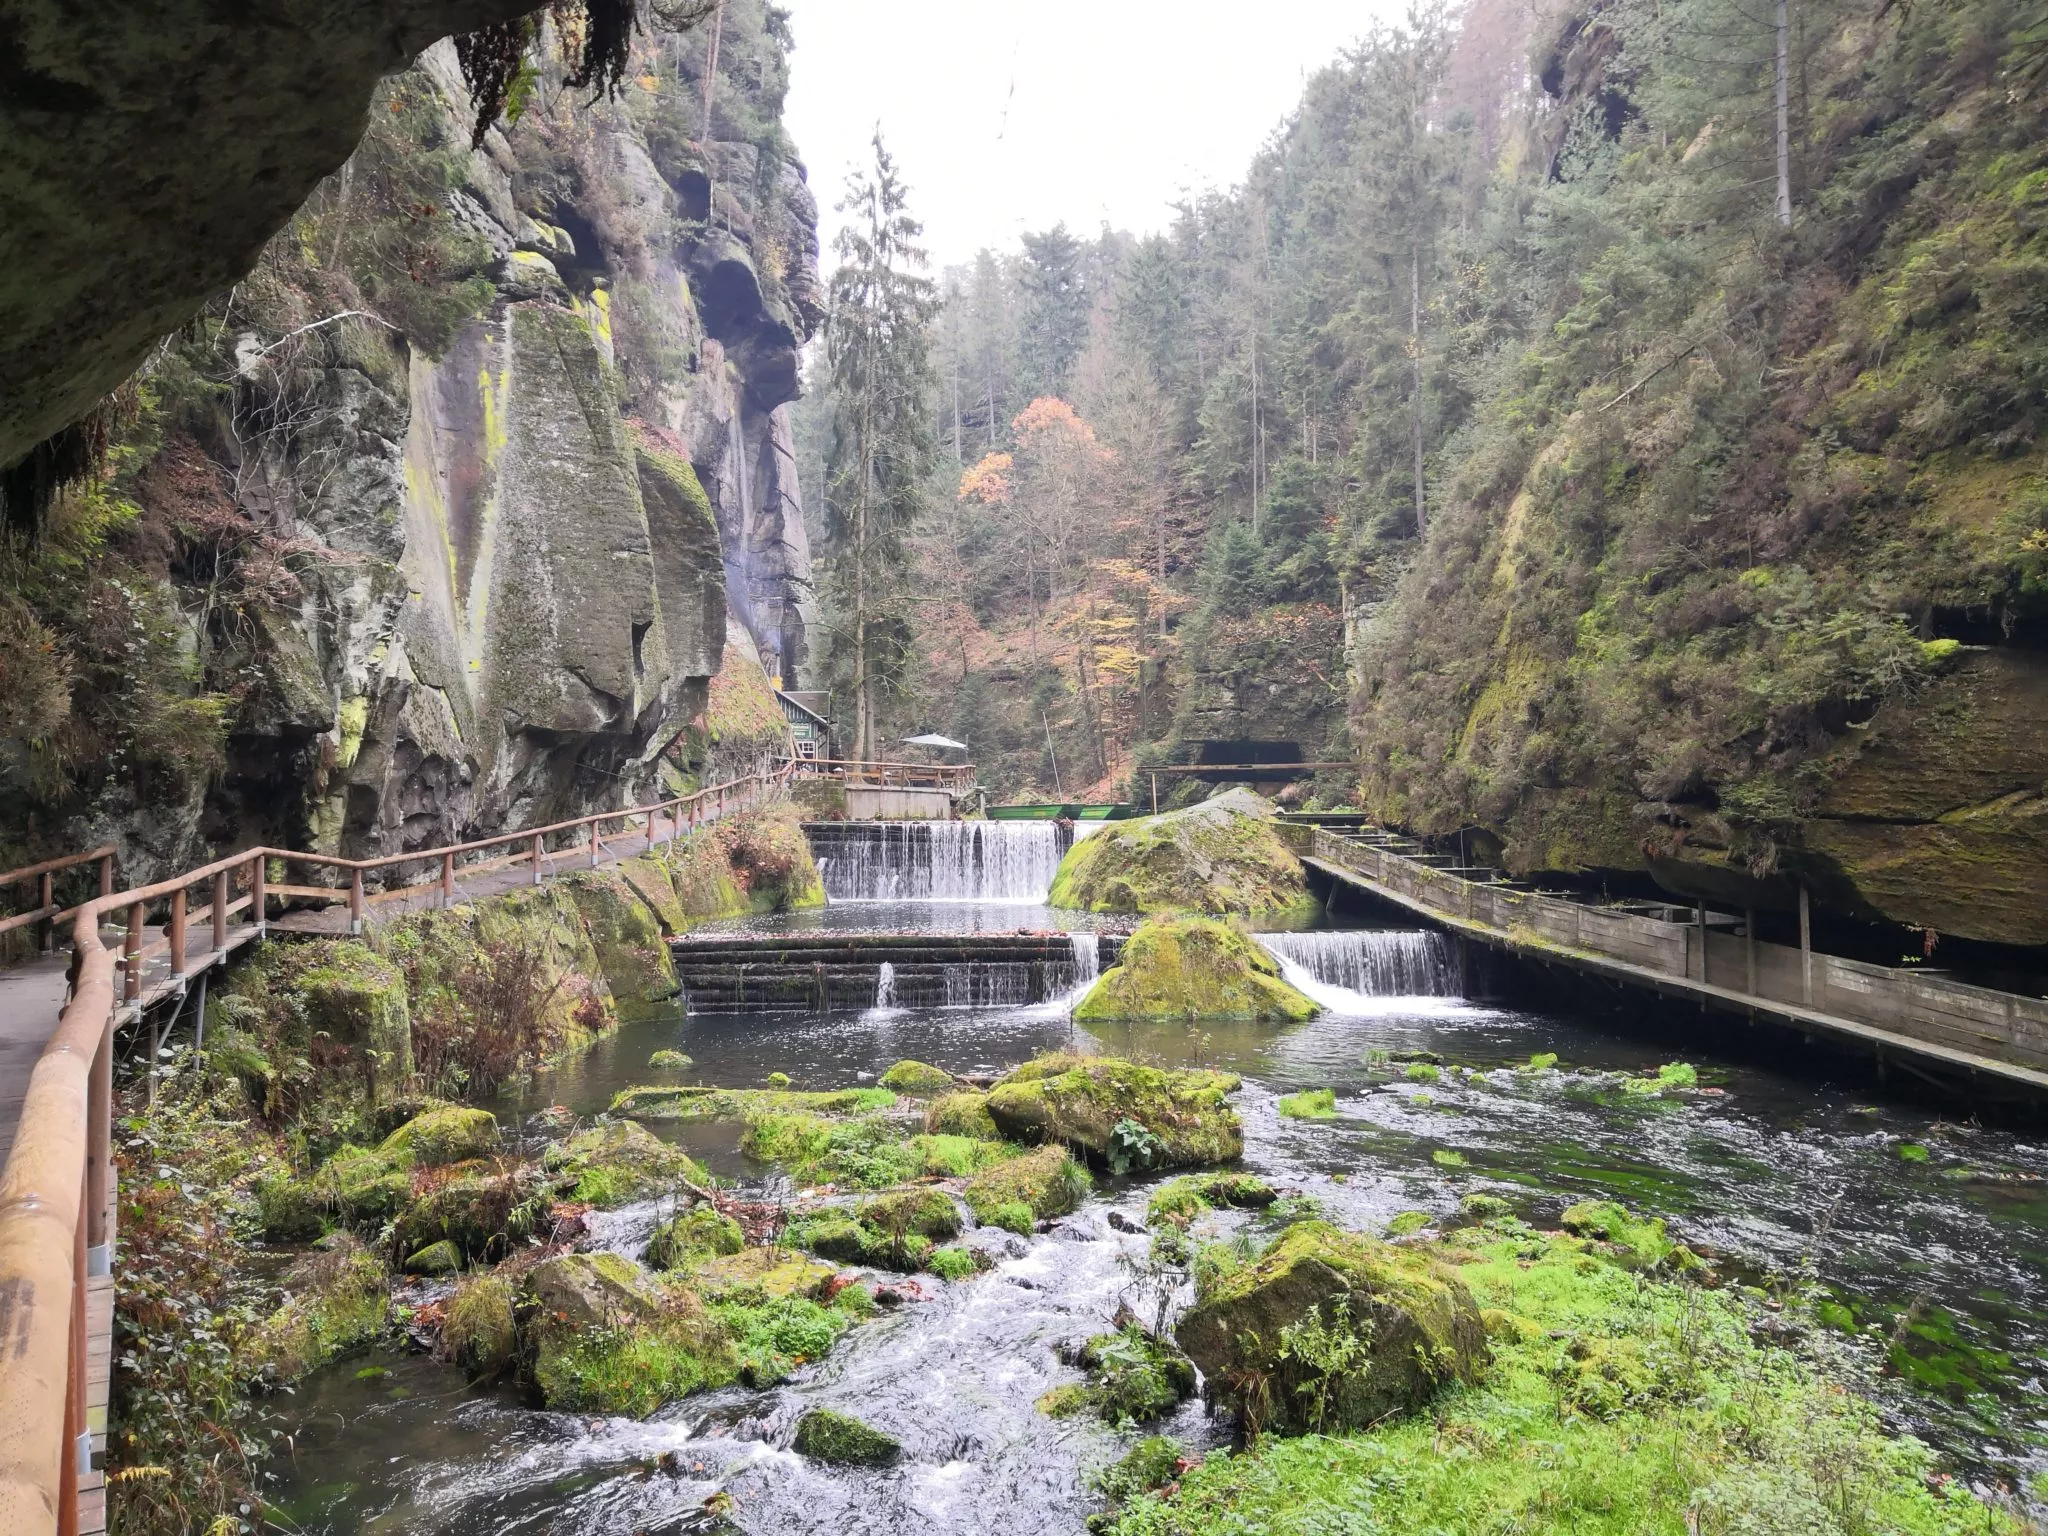 Bohemian Switzerland National Park in Czech Republic, Europe | Parks,Trekking & Hiking - Rated 4.5